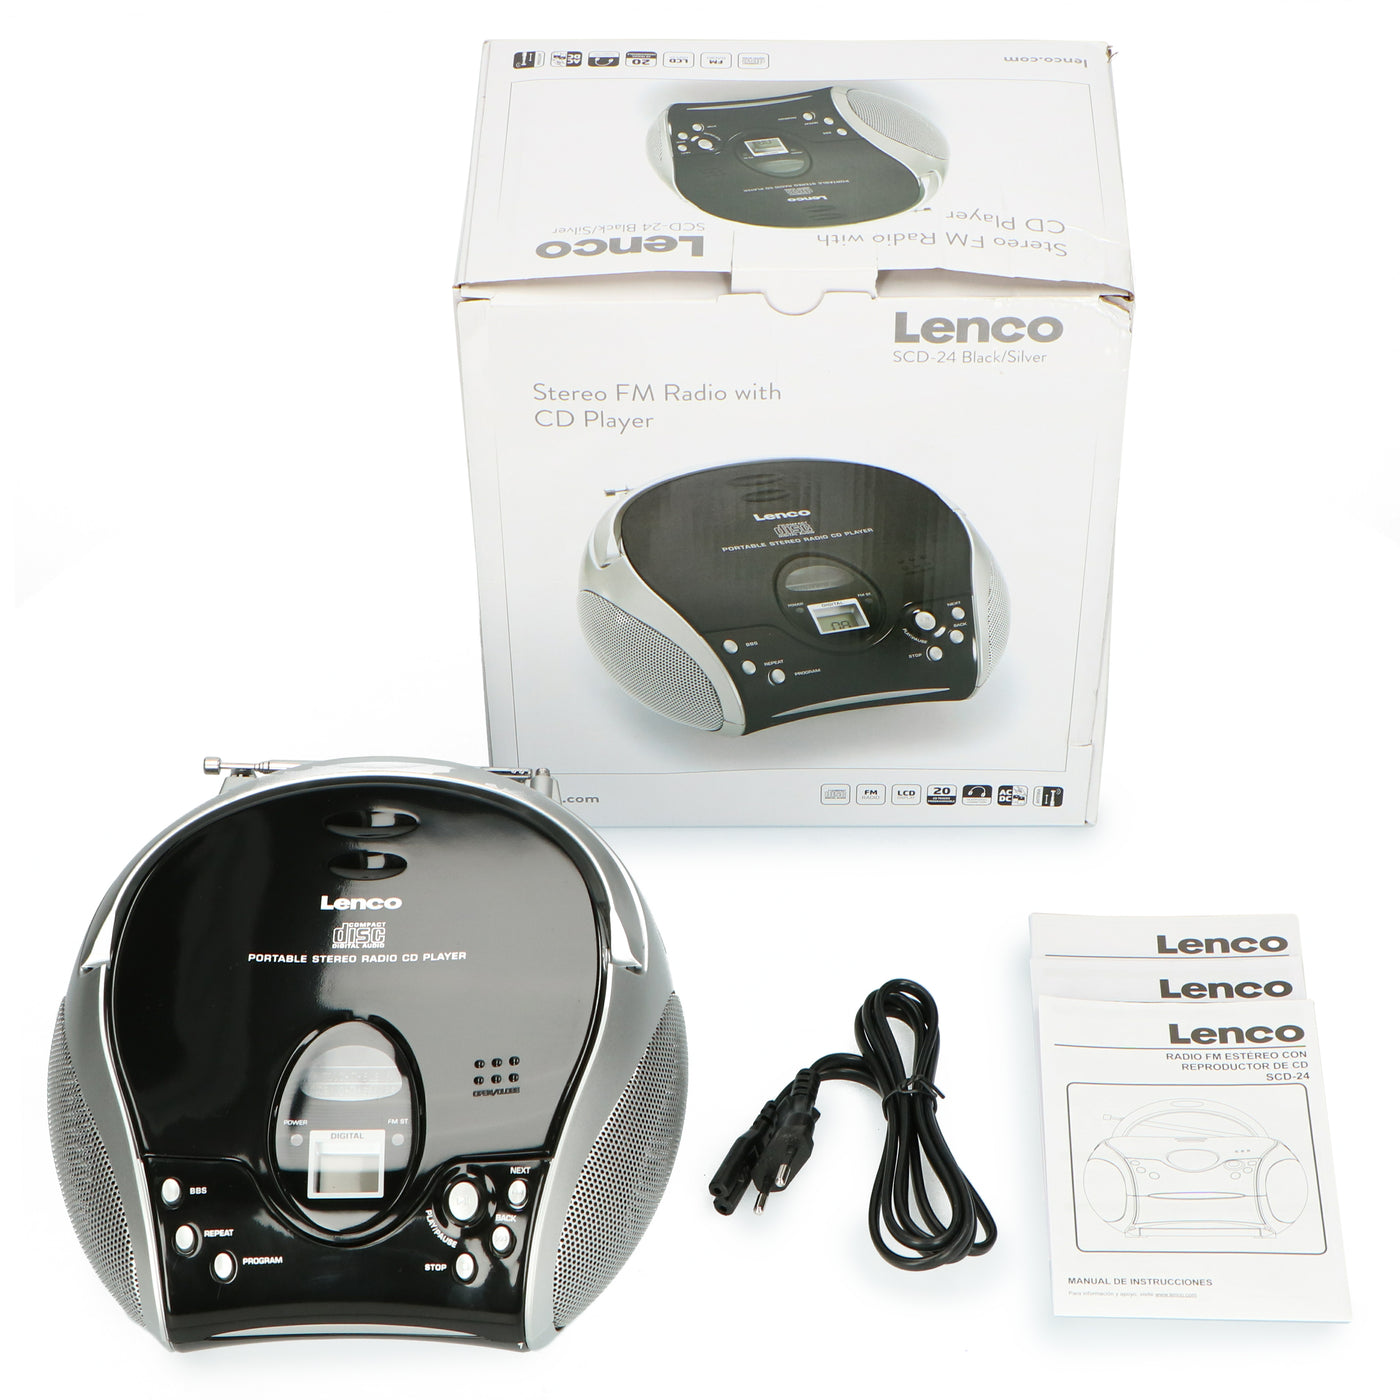 LENCO SCD-24 Black/Silver - Portable stereo FM radio with CD player - Black/silver